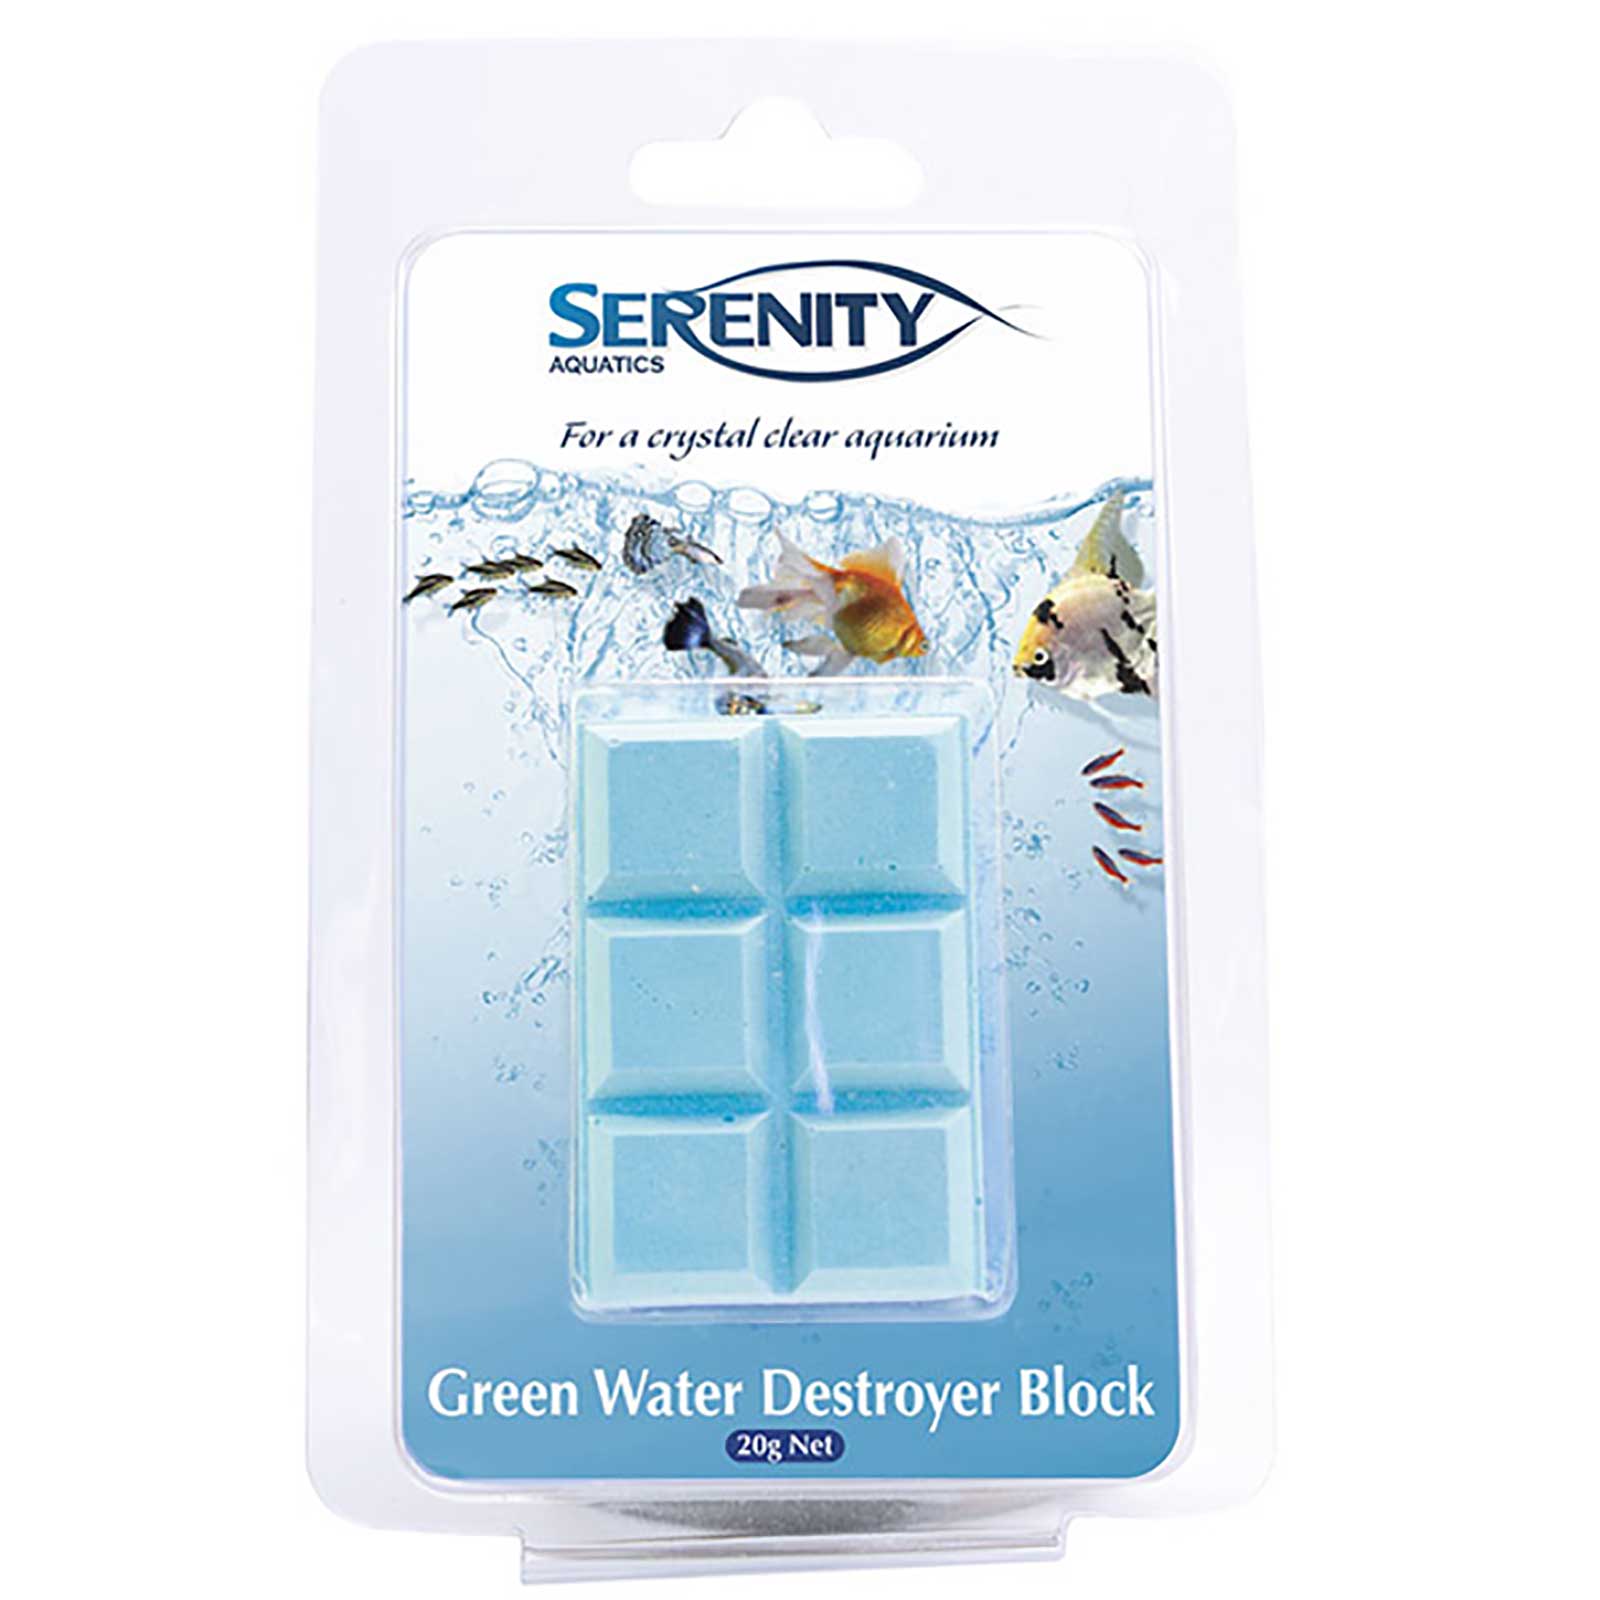 Serenity Green Water Destroyer Block